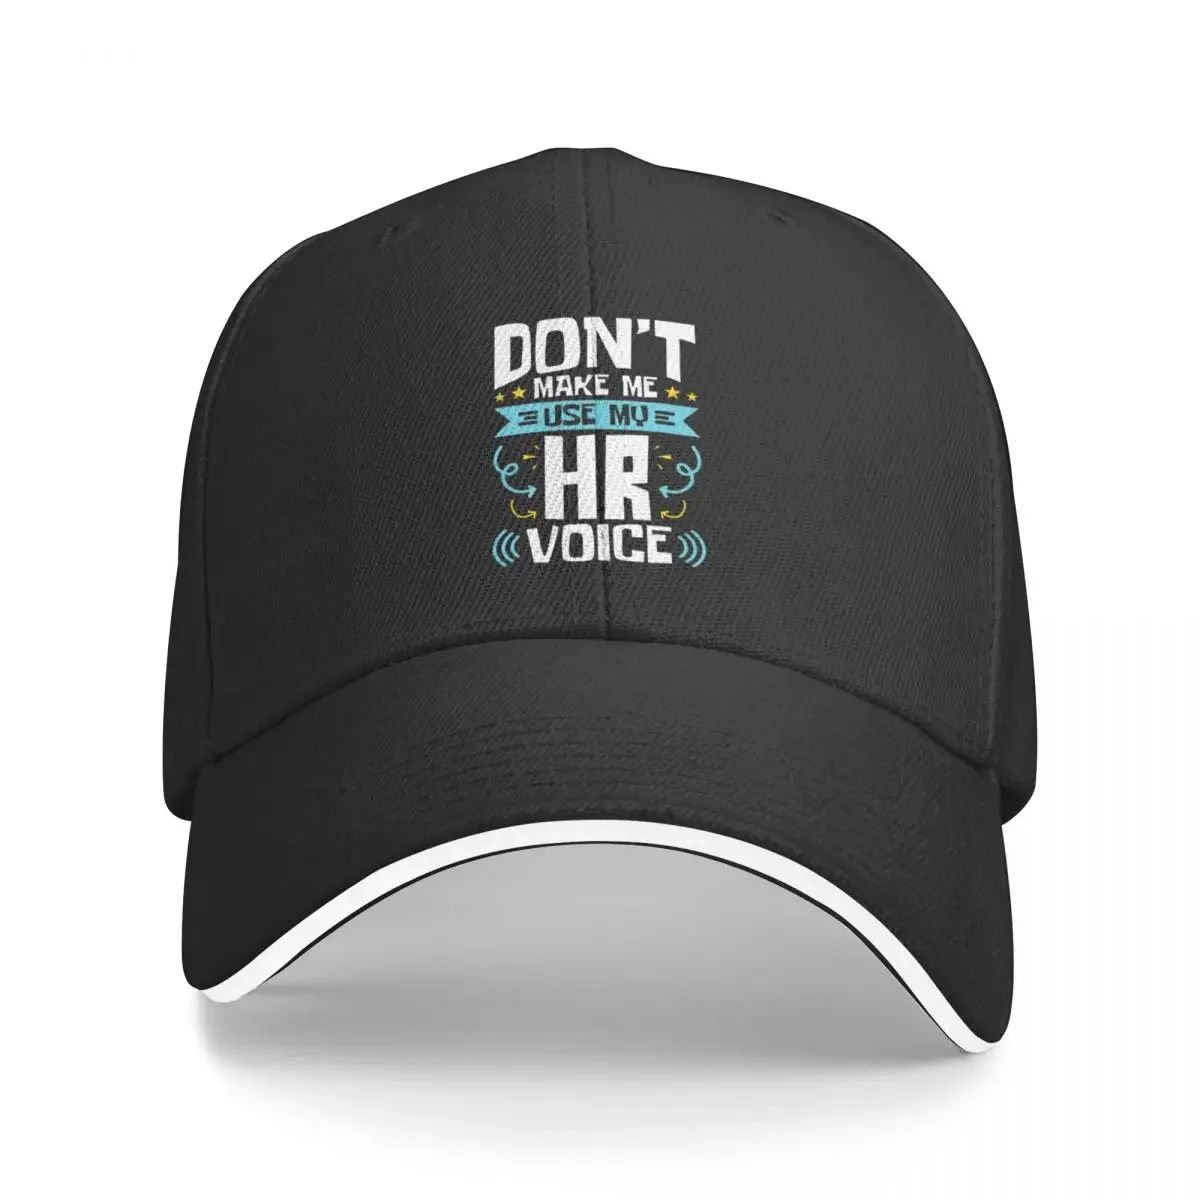 

Human Resources Don't Make Me Use My HR Voice Cap Baseball Cap wild ball hat trucker hat Sun cap men's hats Women's